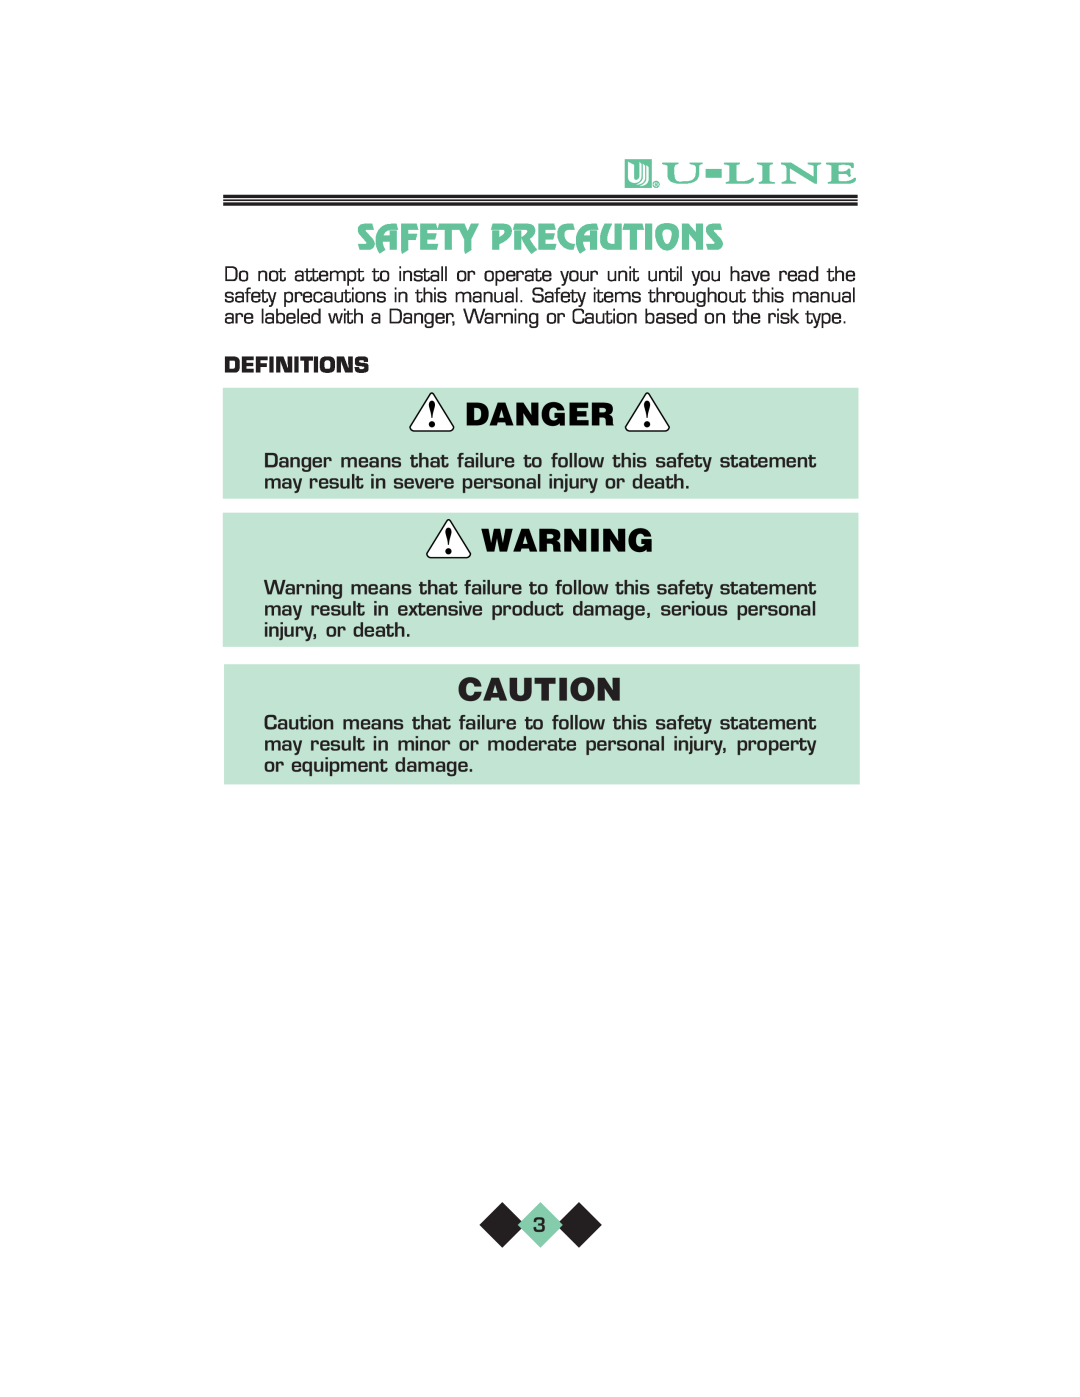 U-Line pmn manual Safety Precautions, Danger, Definitions 